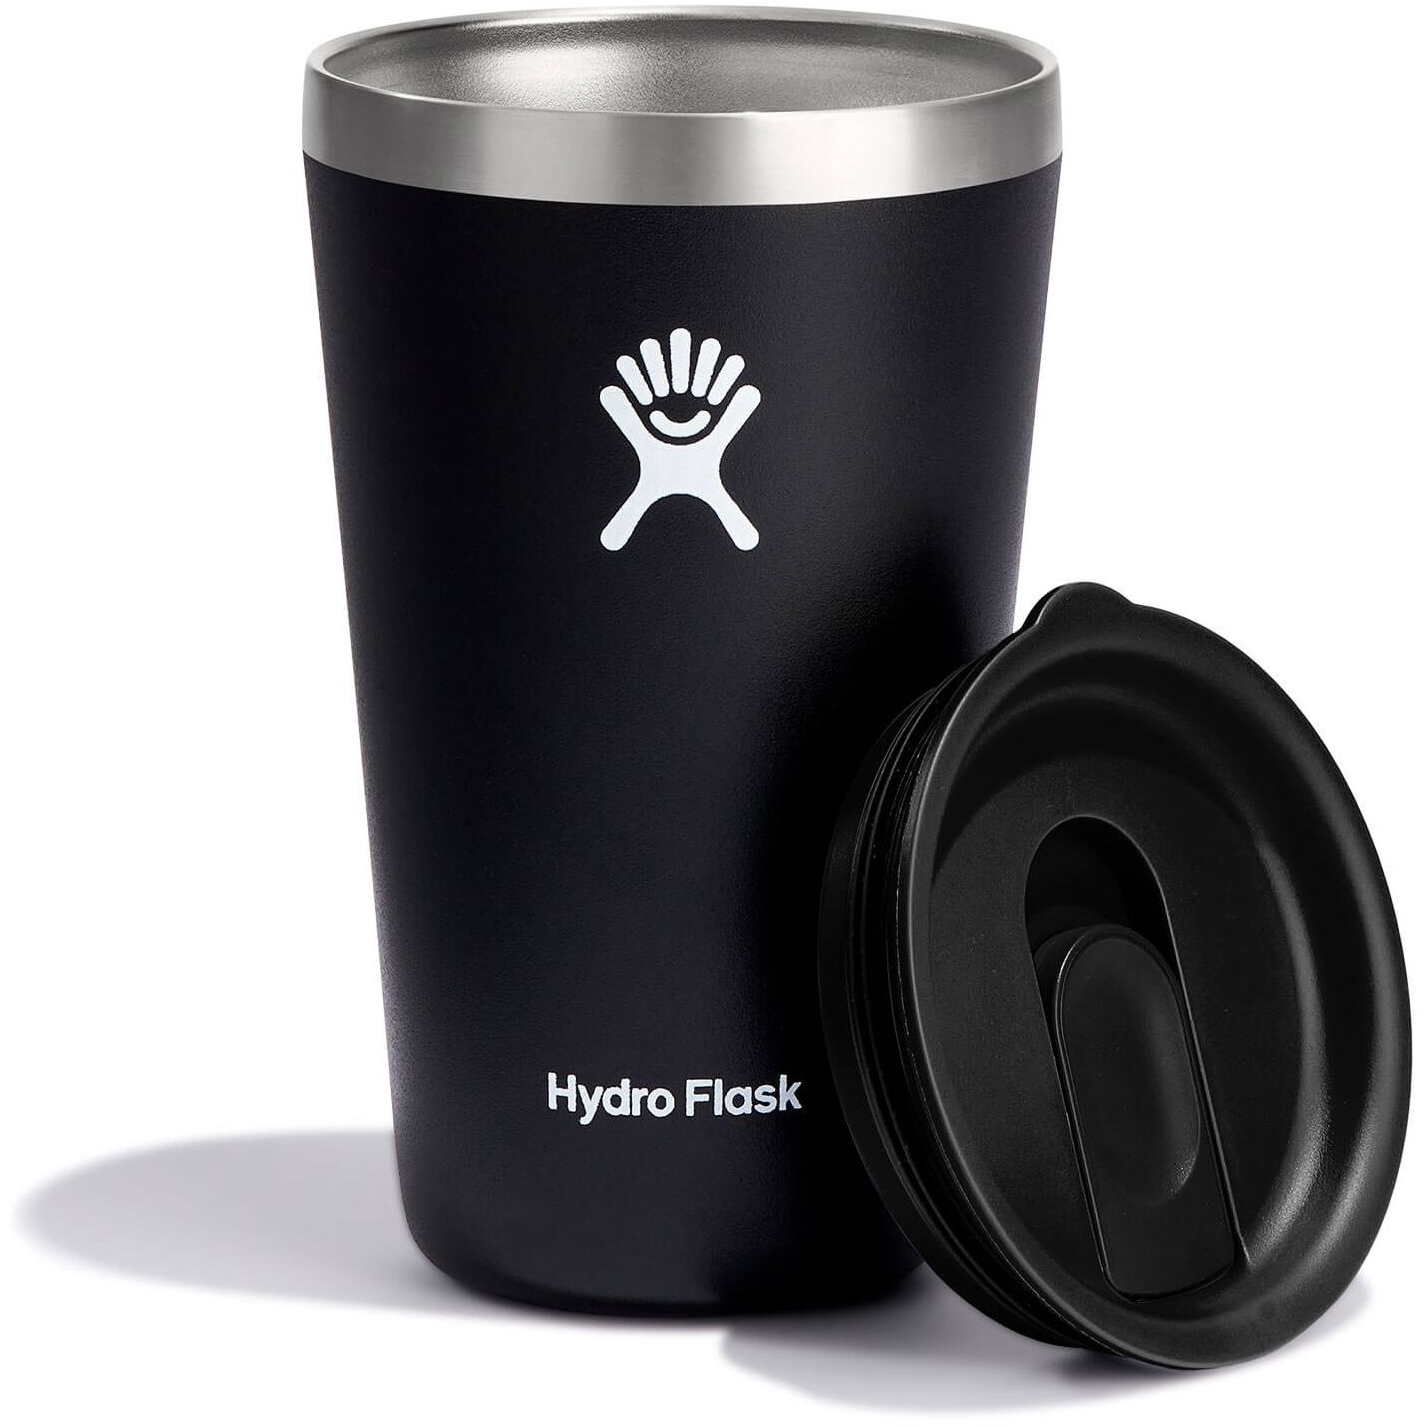 Hydro Flask All Around Tumbler